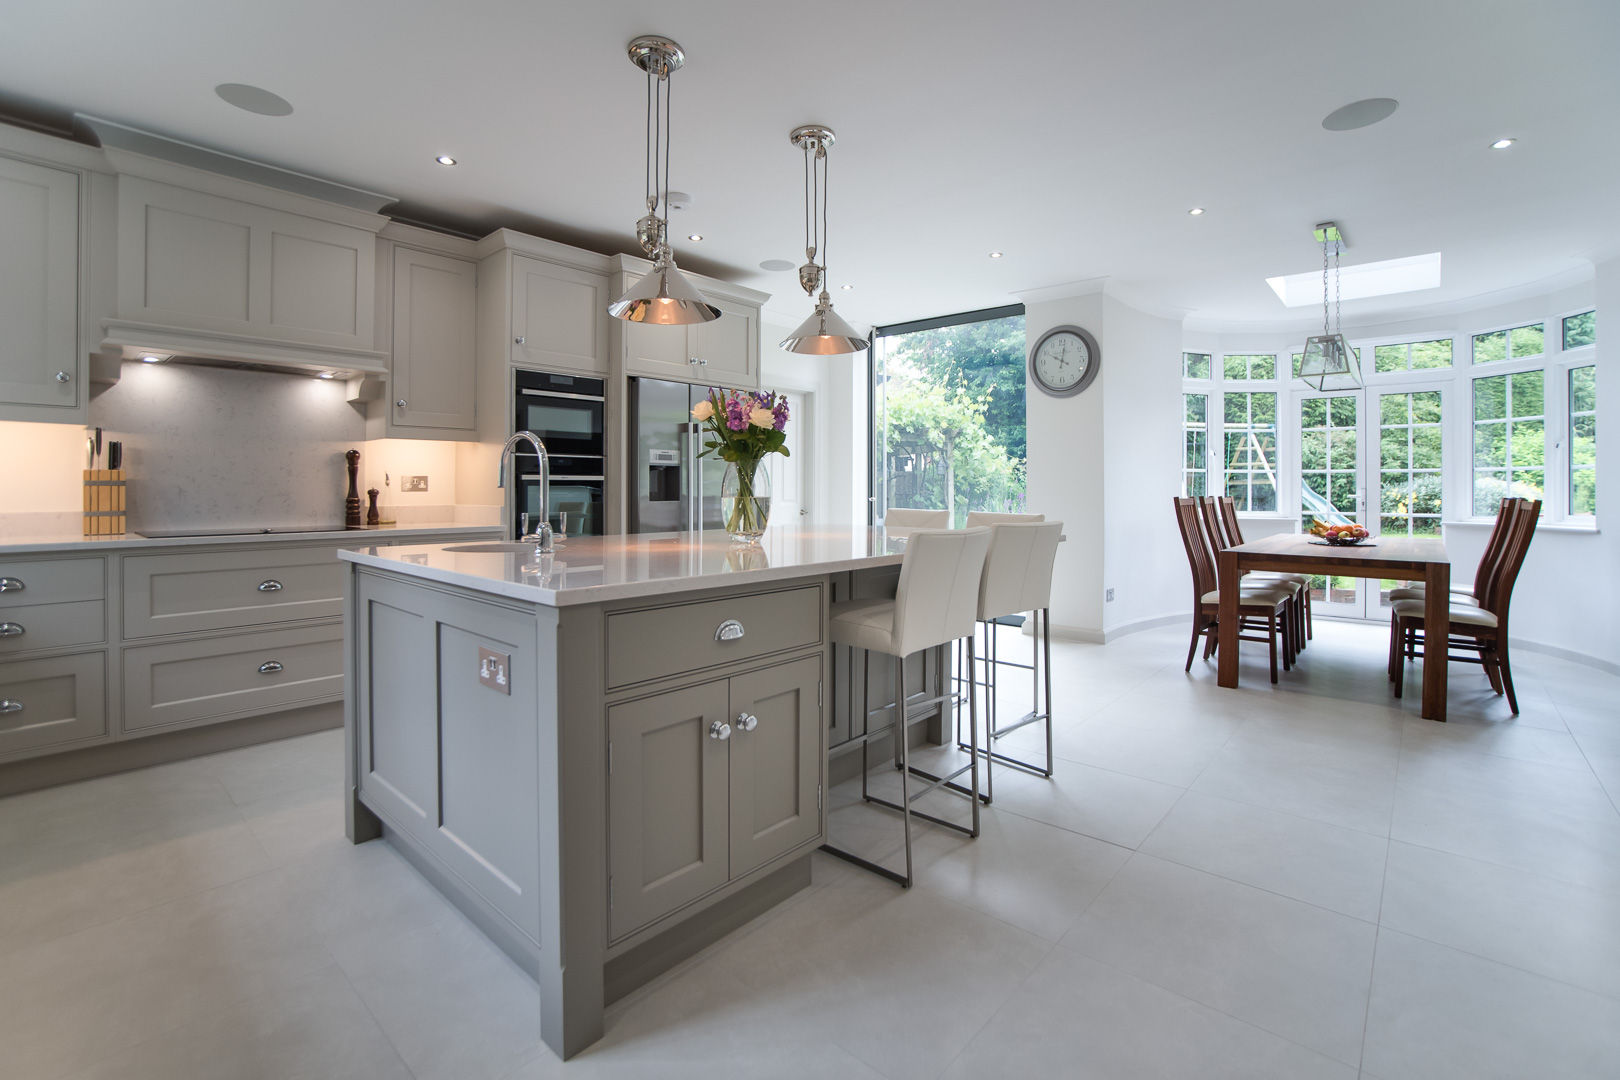 Beautiful bespoke kitchen in Hertfordshire by John Ladbury John Ladbury and Company مطبخ modern,bespoke,minimalist